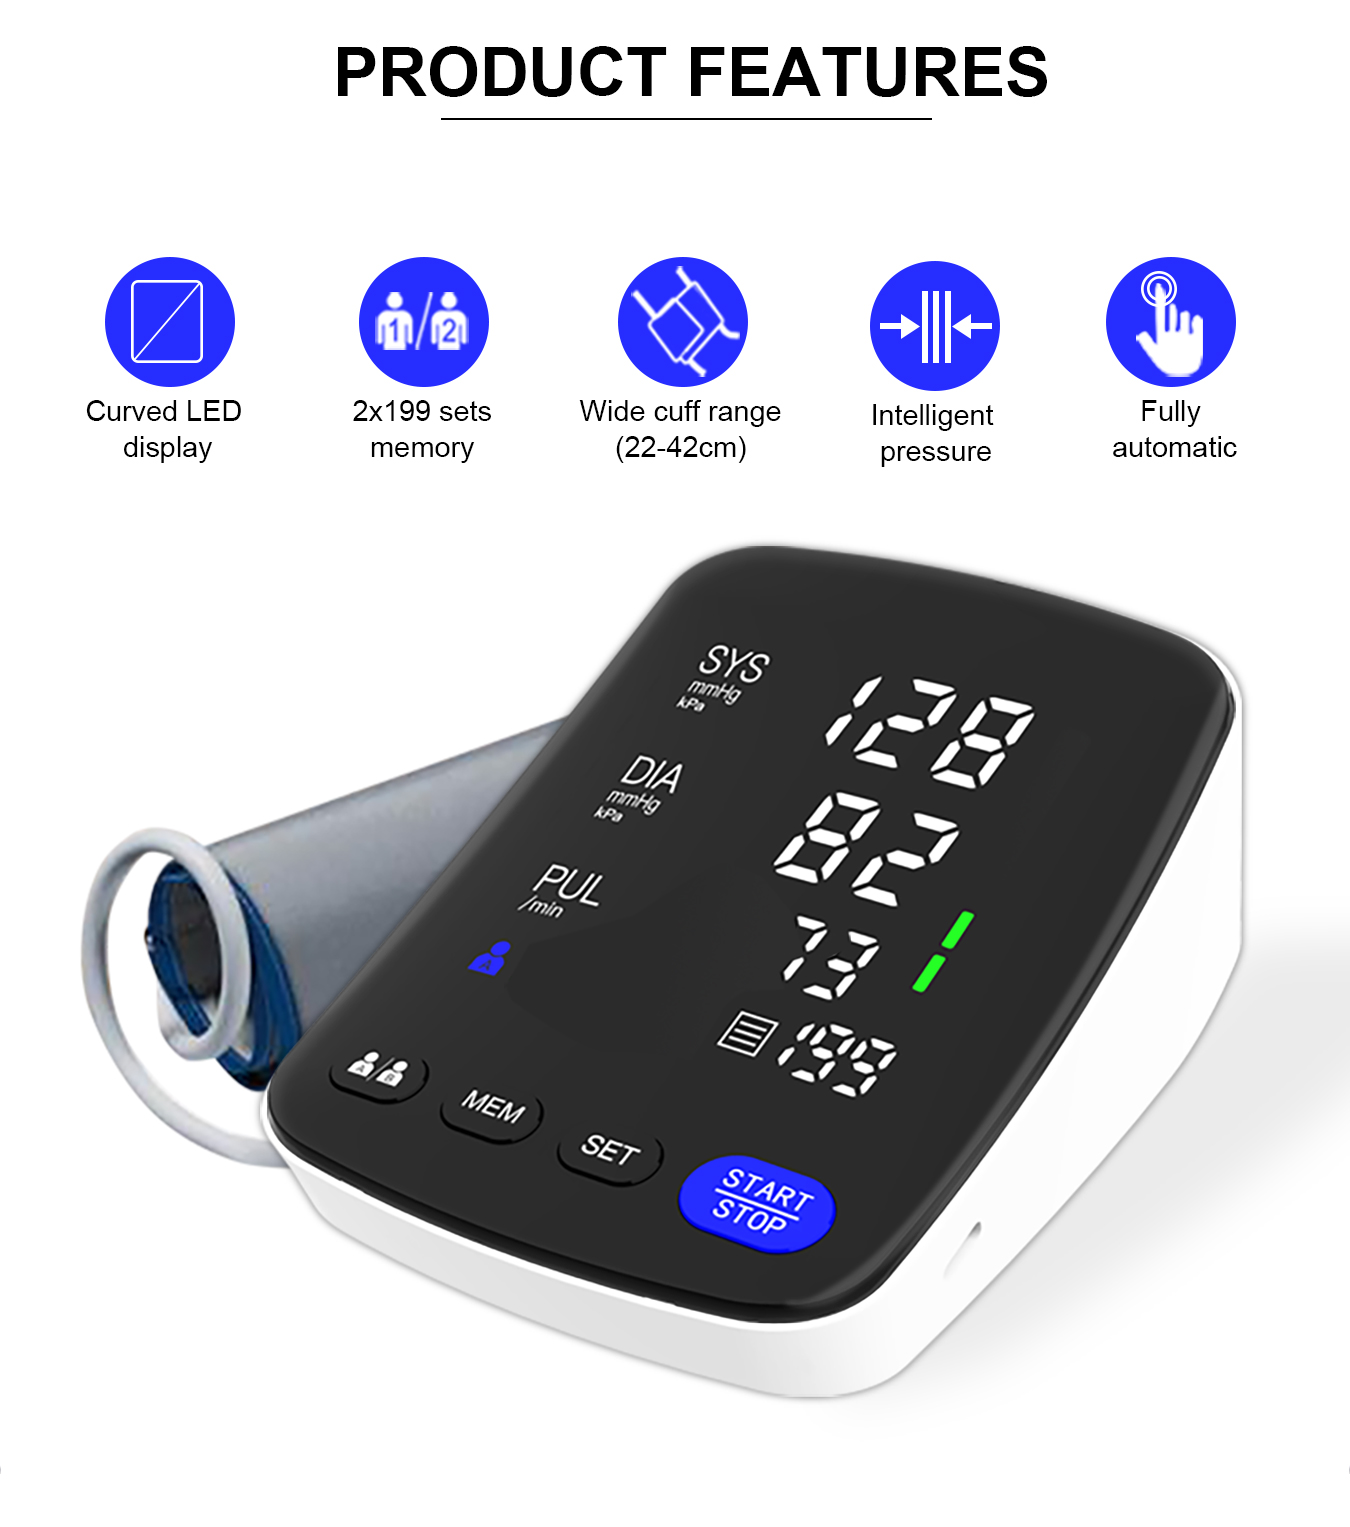 OMRON 10 Series Wireless Upper Arm Blood Pressure Monitor – Abbey Tech Hub